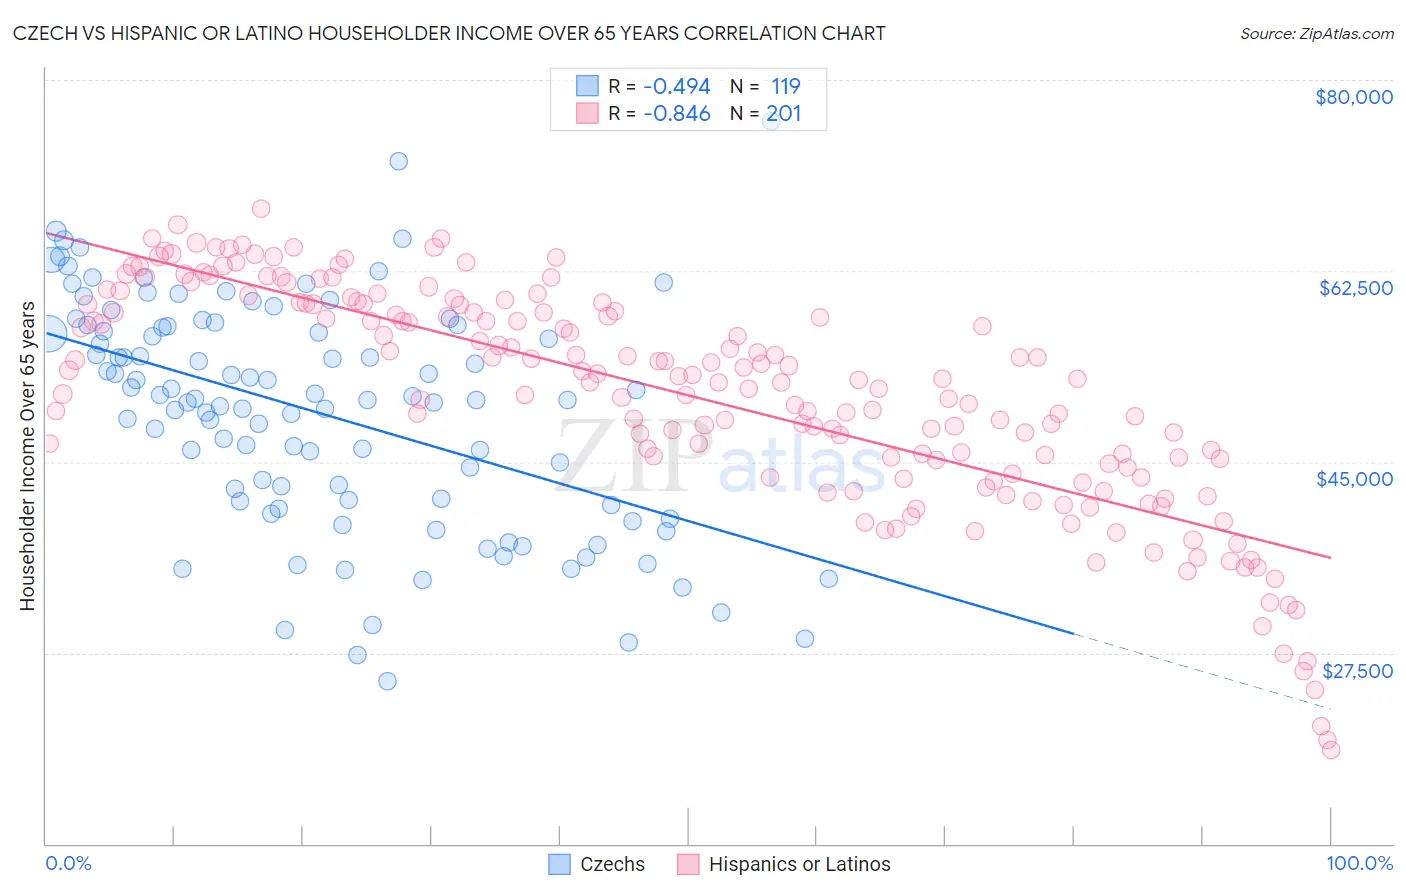 Czech vs Hispanic or Latino Householder Income Over 65 years